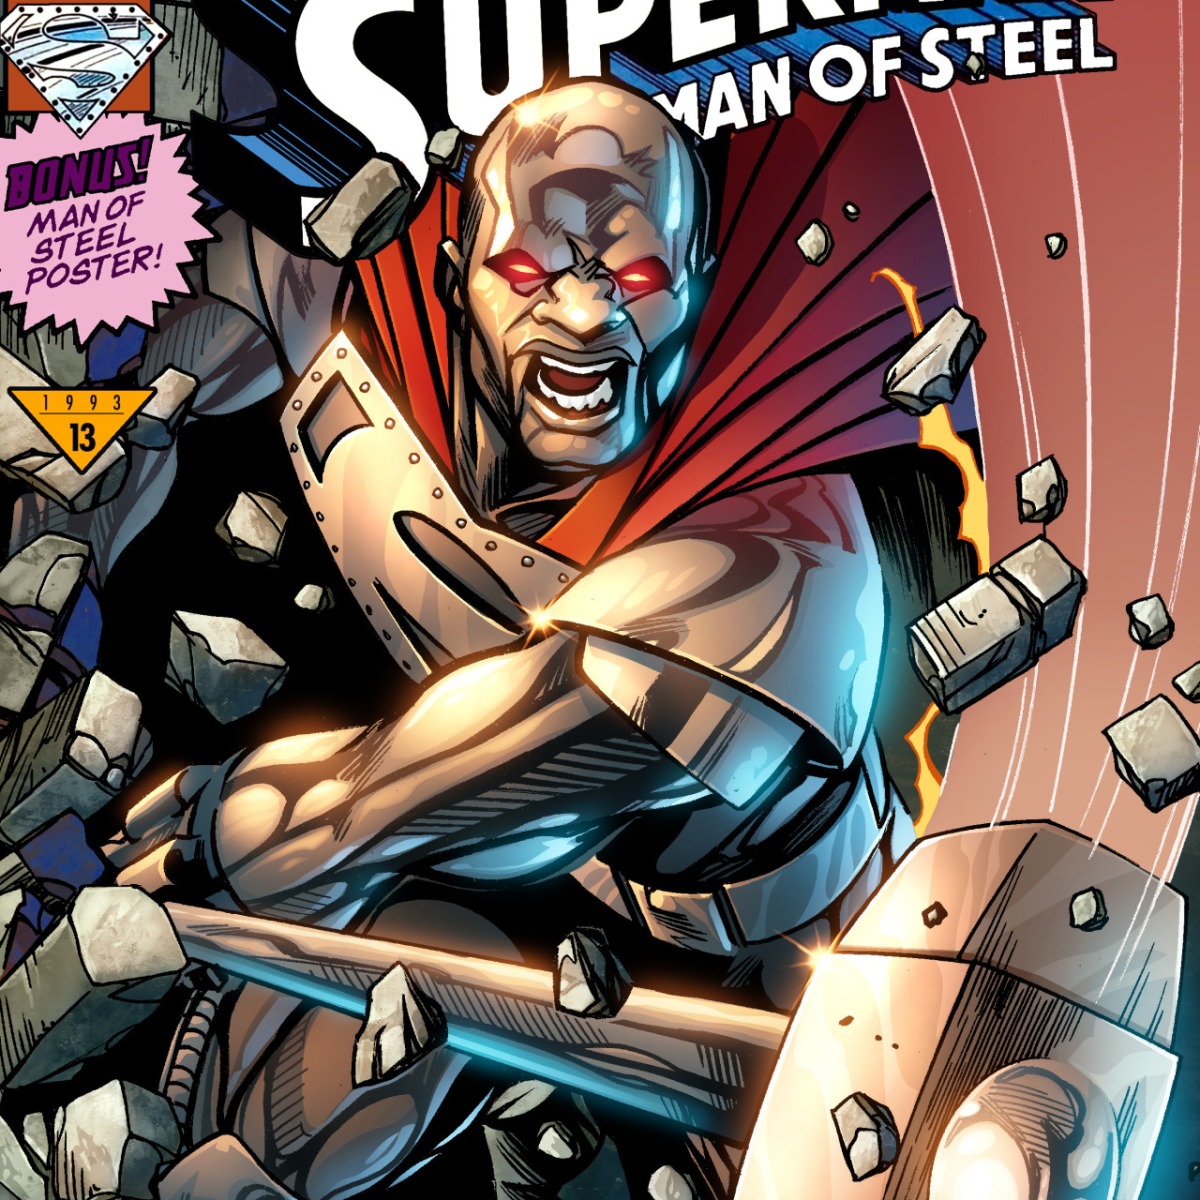 Steel anniversary – comic cover remake